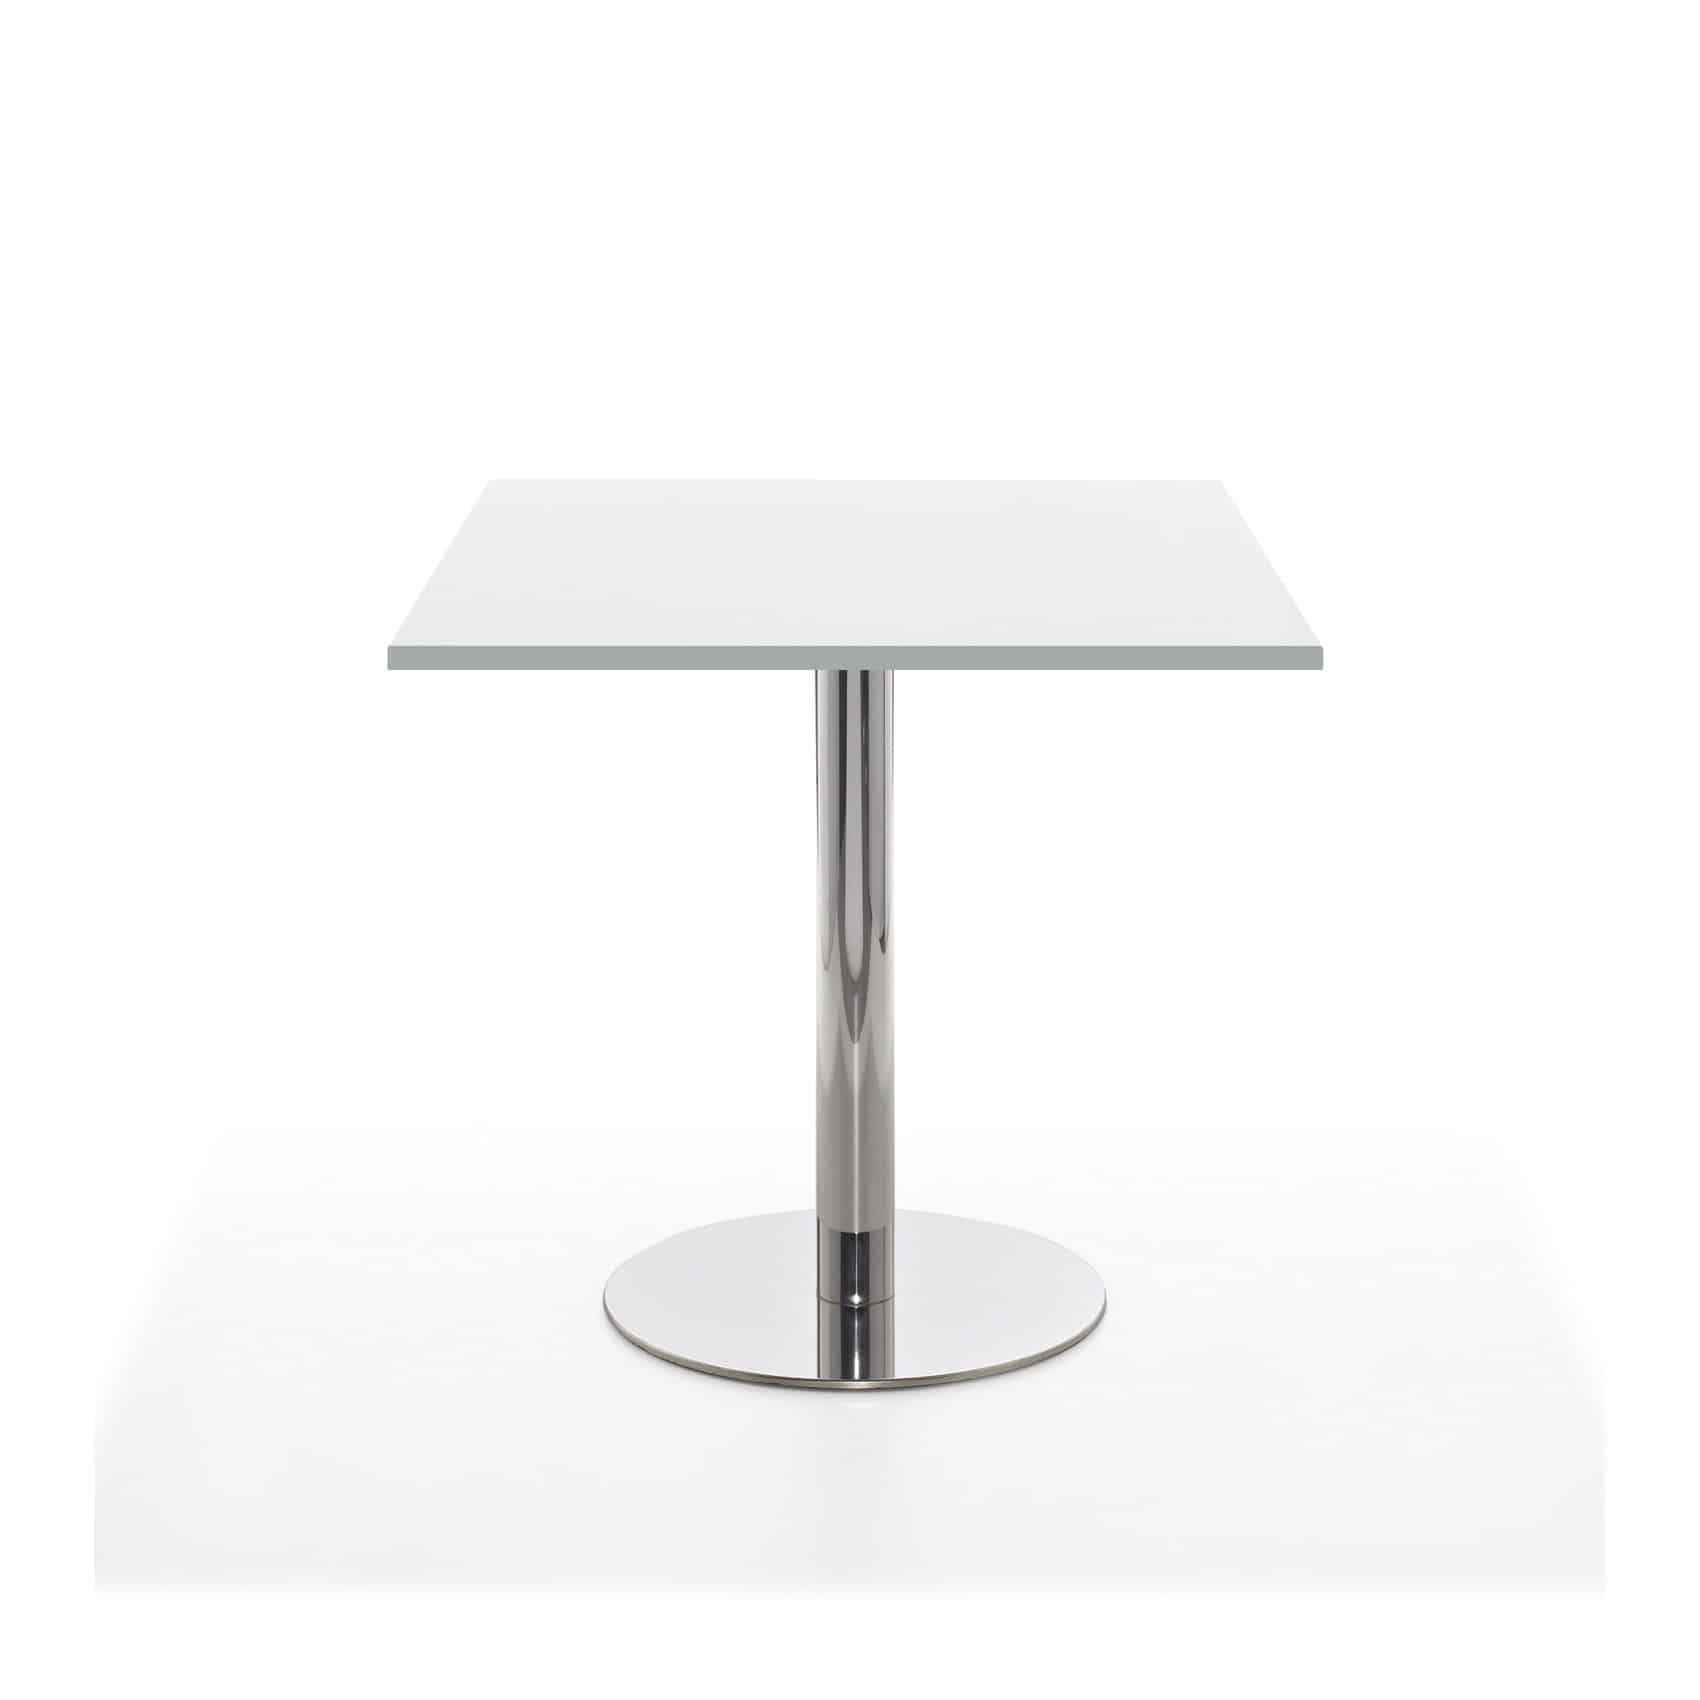 Enzo seating table KS 70x70 cm white